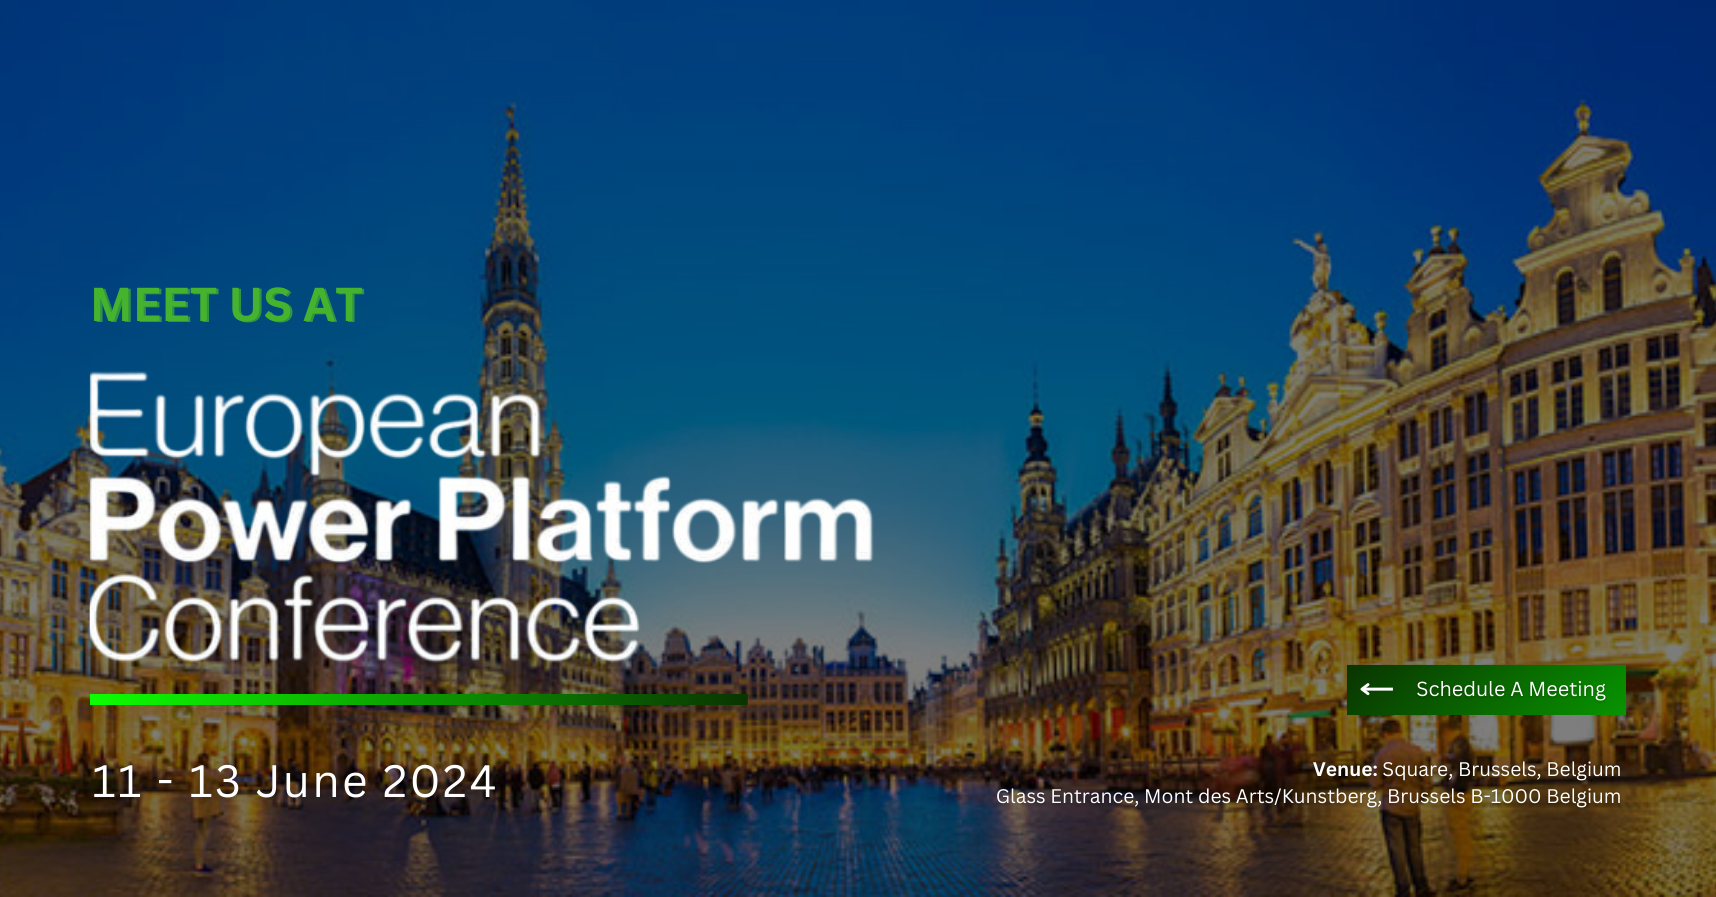 European Power Platform Conference in Belgium from 11 – 13 June 2024​